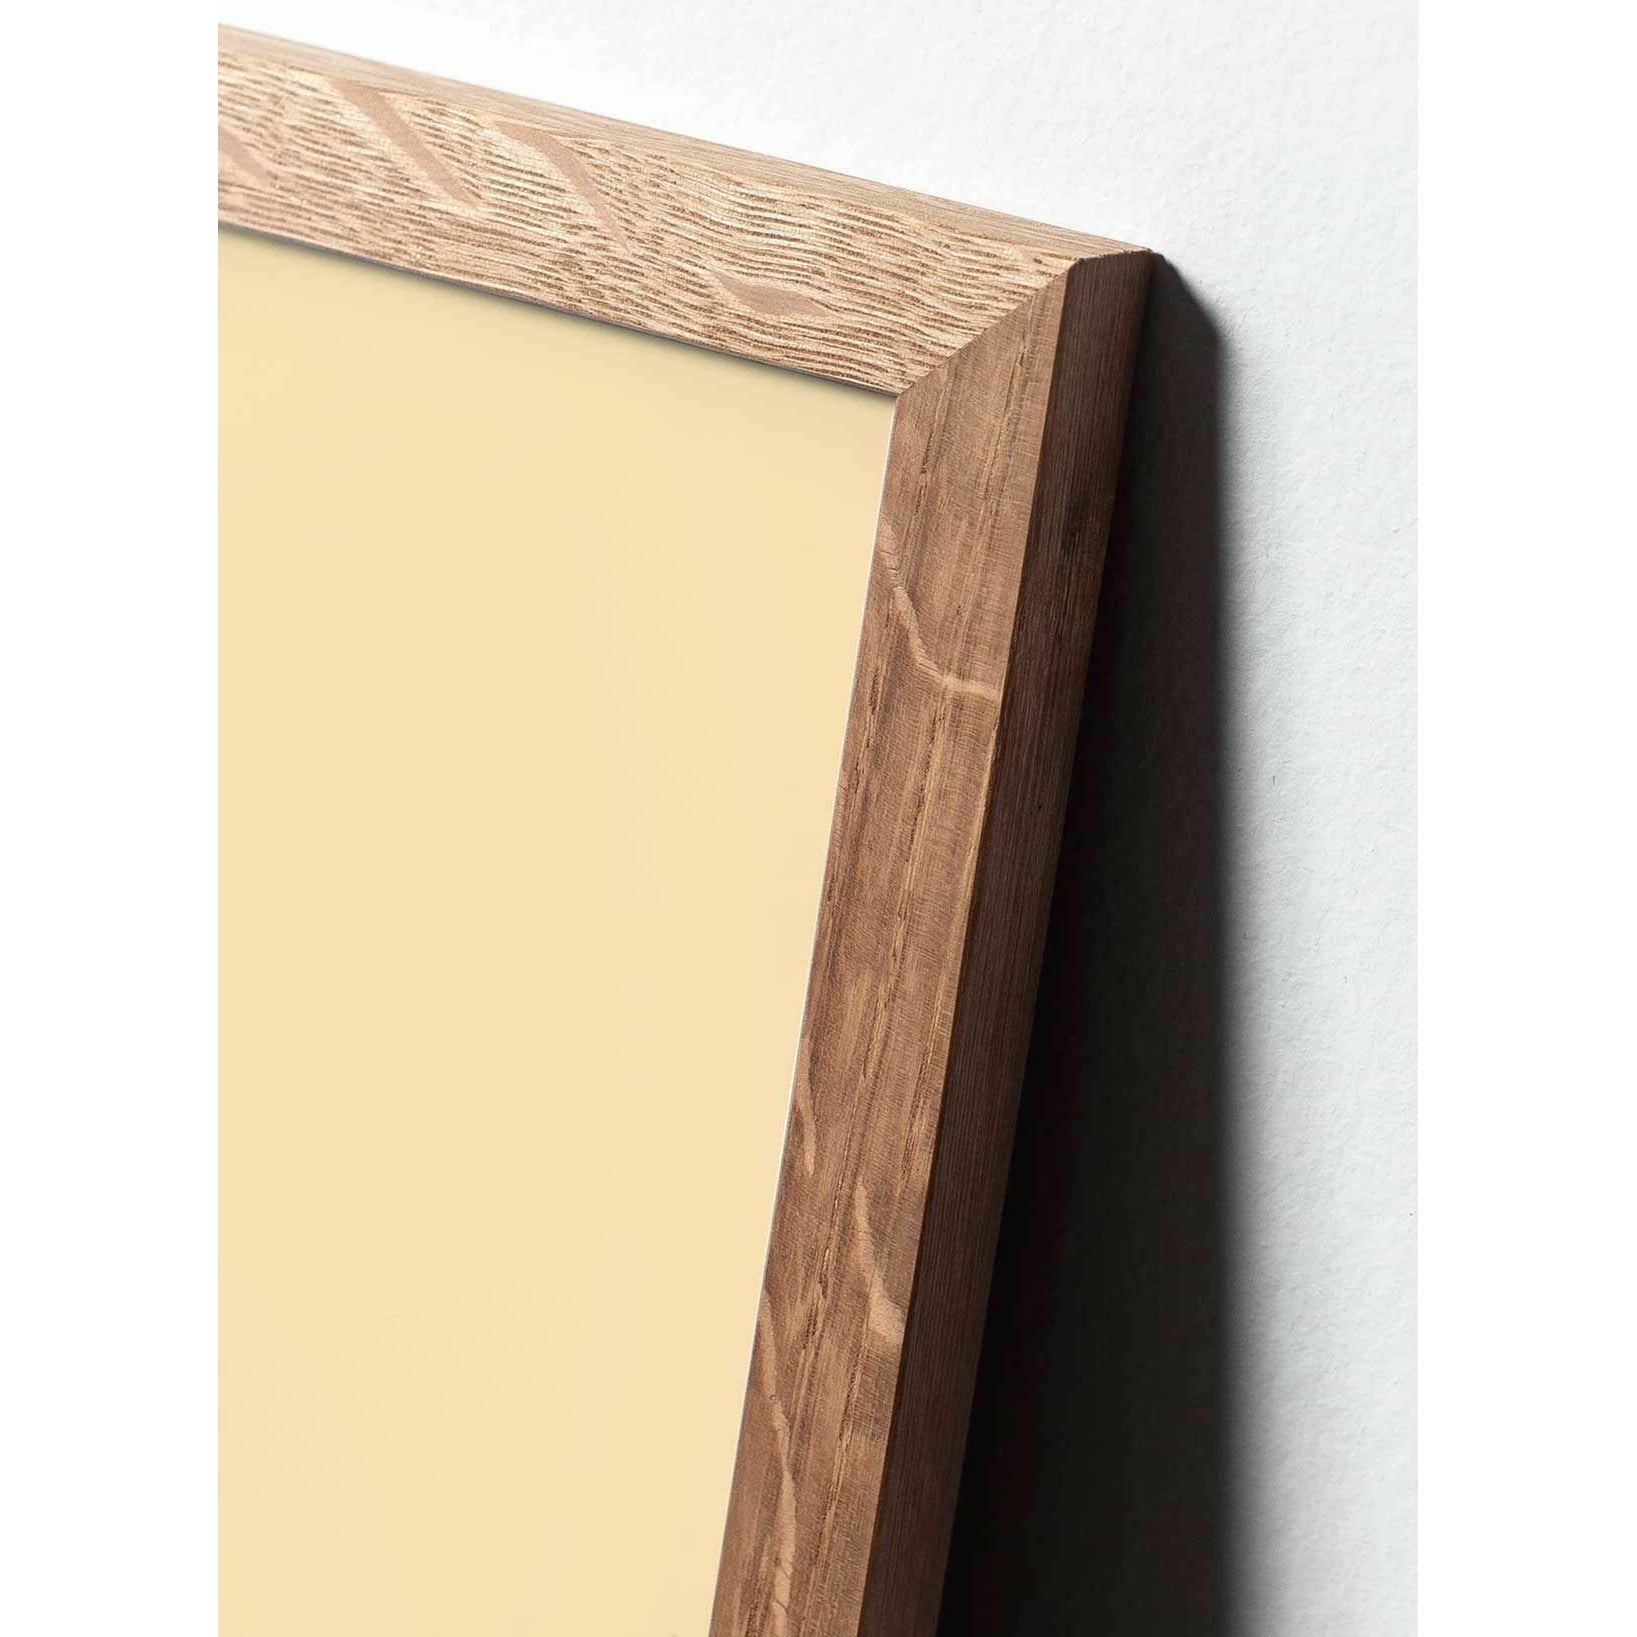 Póster de línea de huevo de creación, marco hecho de madera clara 50x70 cm, fondo blanco